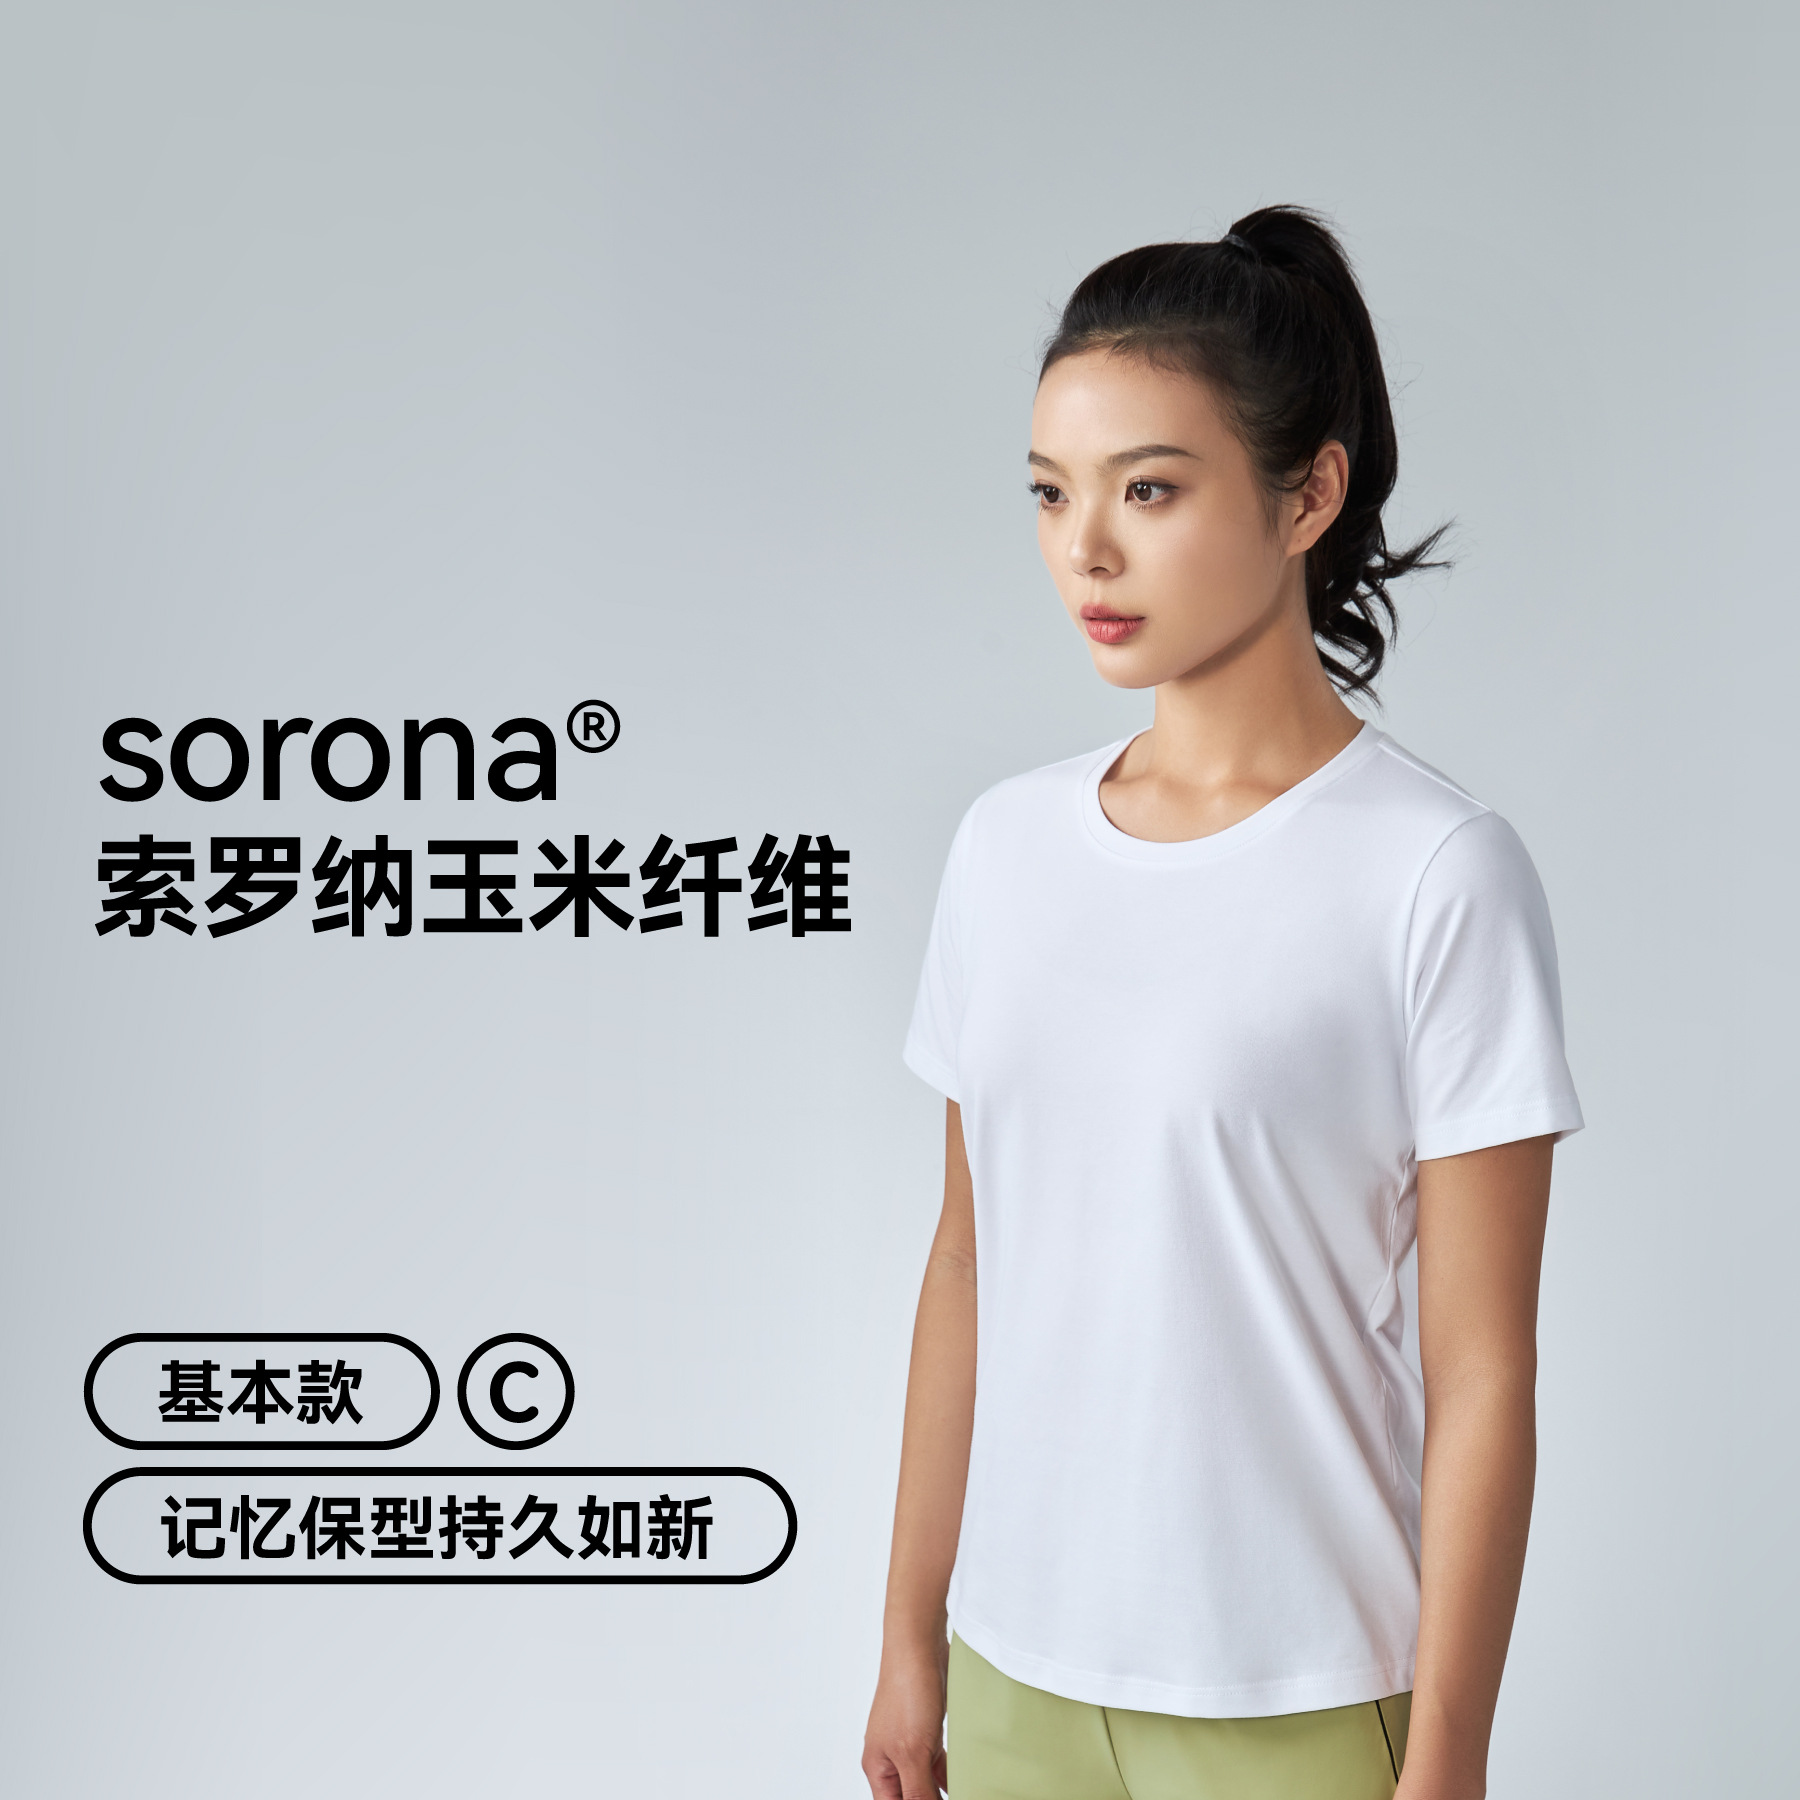 DuPont Sorona Sorona Men's round Neck T-shirt Summer Cool Solid Color Short Sleeve Loose Casual T-shirt